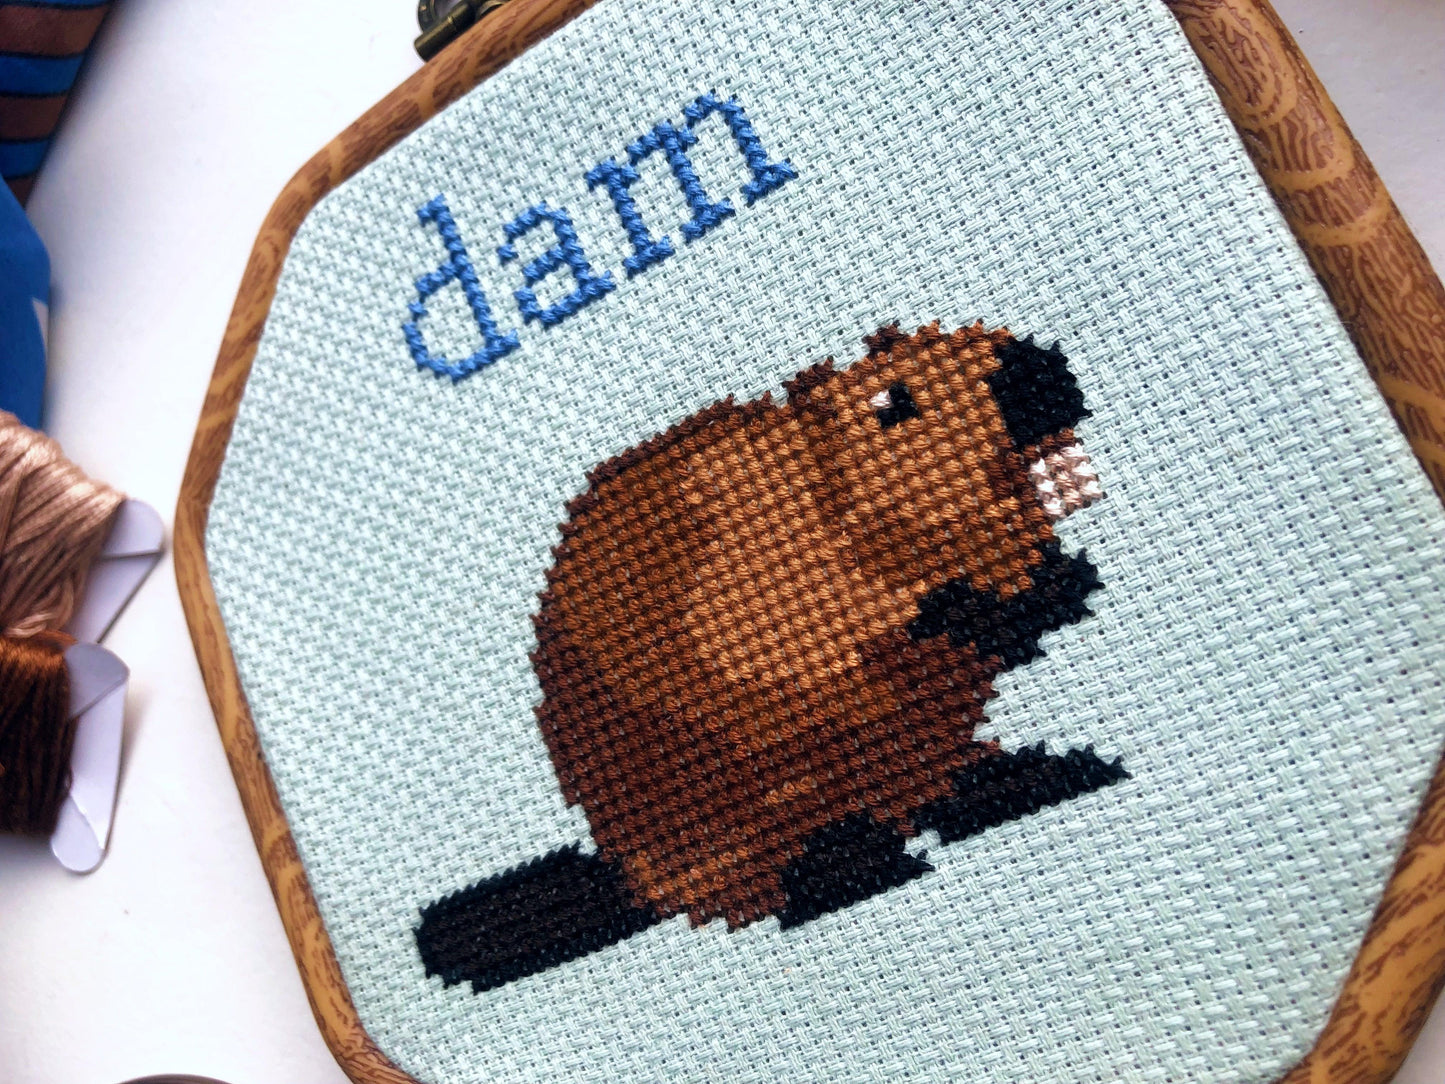 Dam Beaver Cross Stitch Pattern - NeedleLot Designs